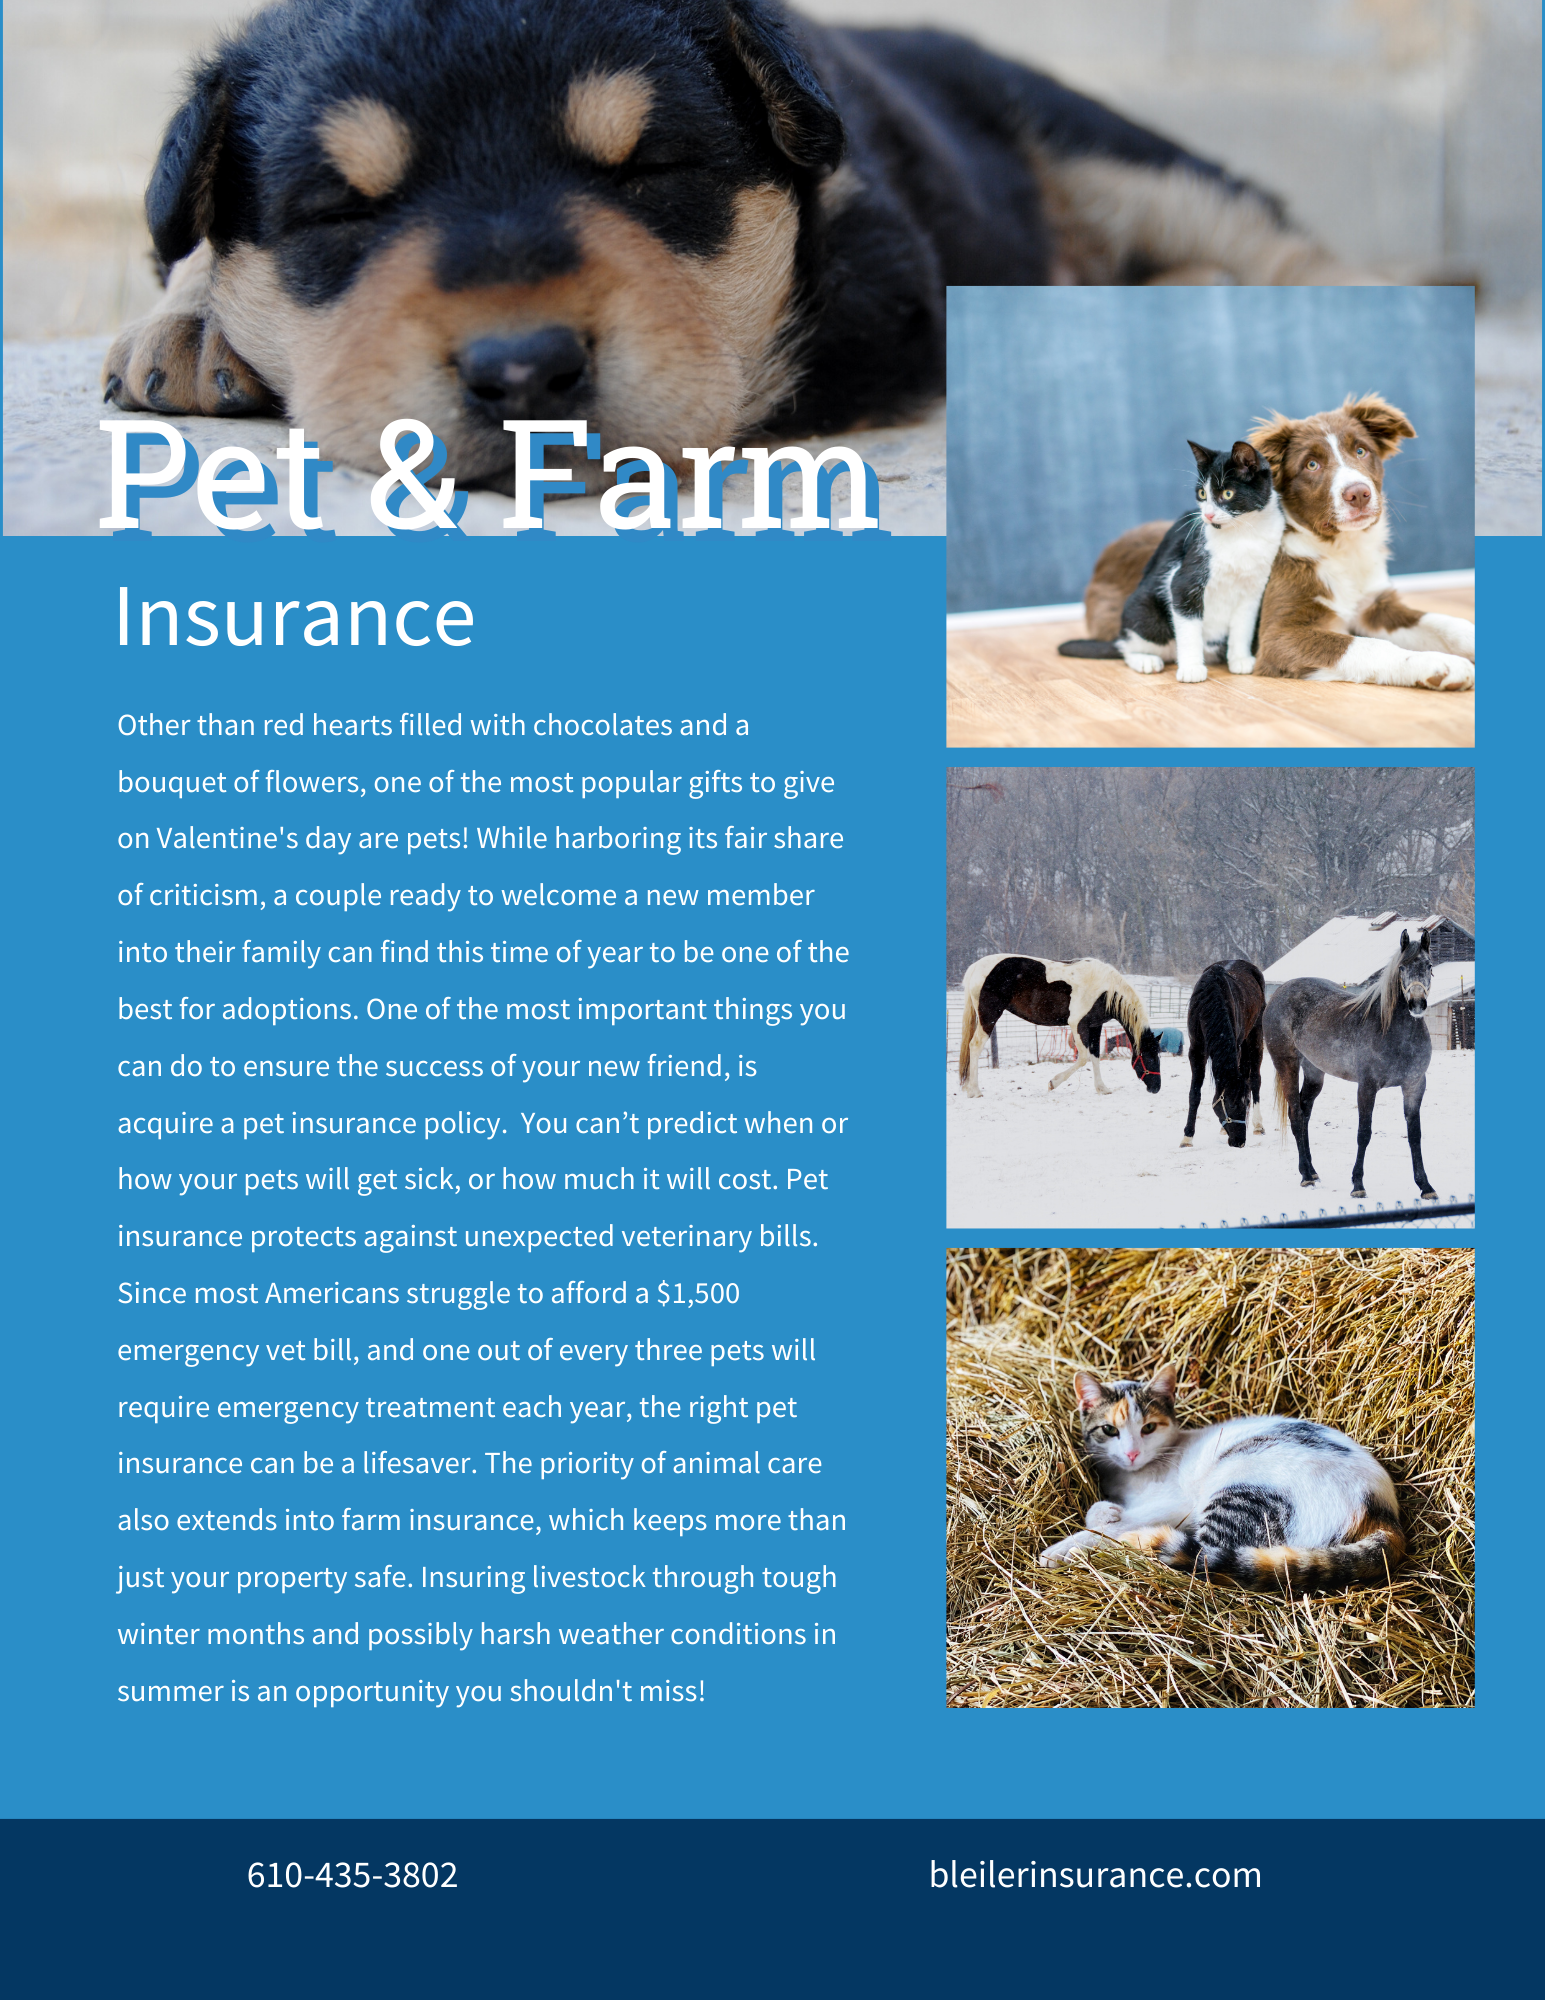 Pet & Farm Insurance